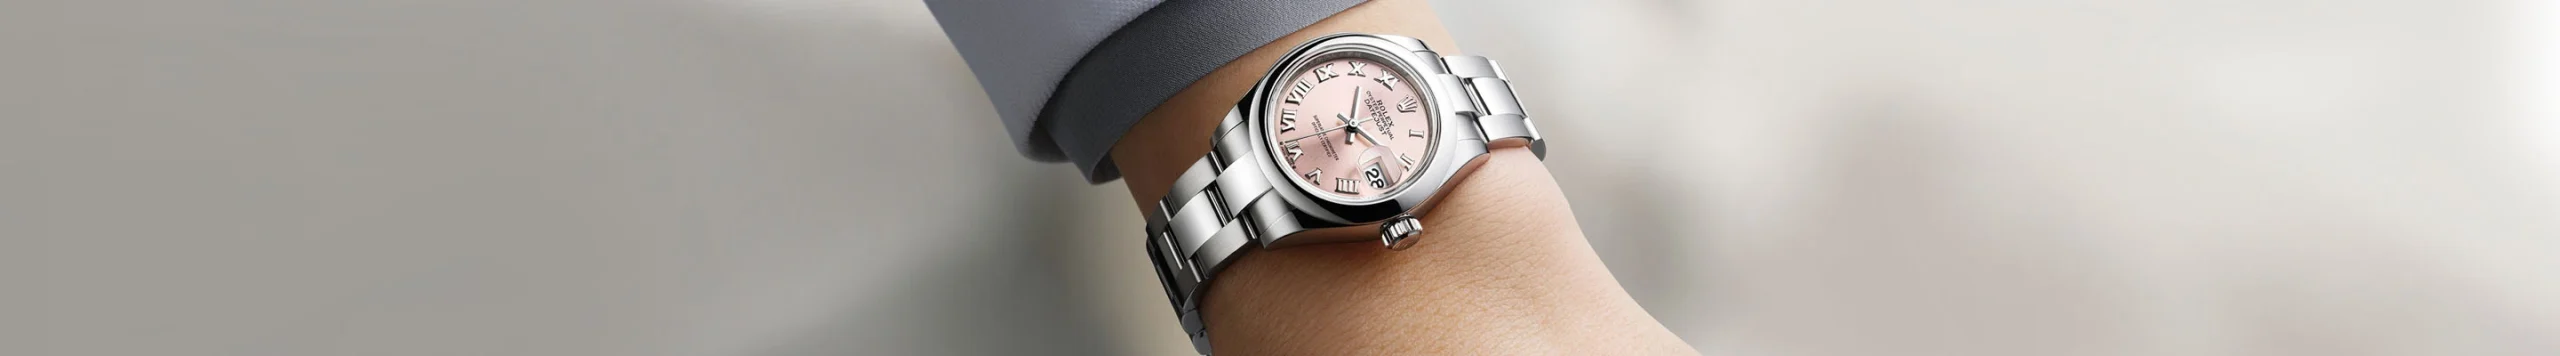 Rolex นาฬิกาสุภาพสตรี | Rolex Official Retailer - Siam Swiss